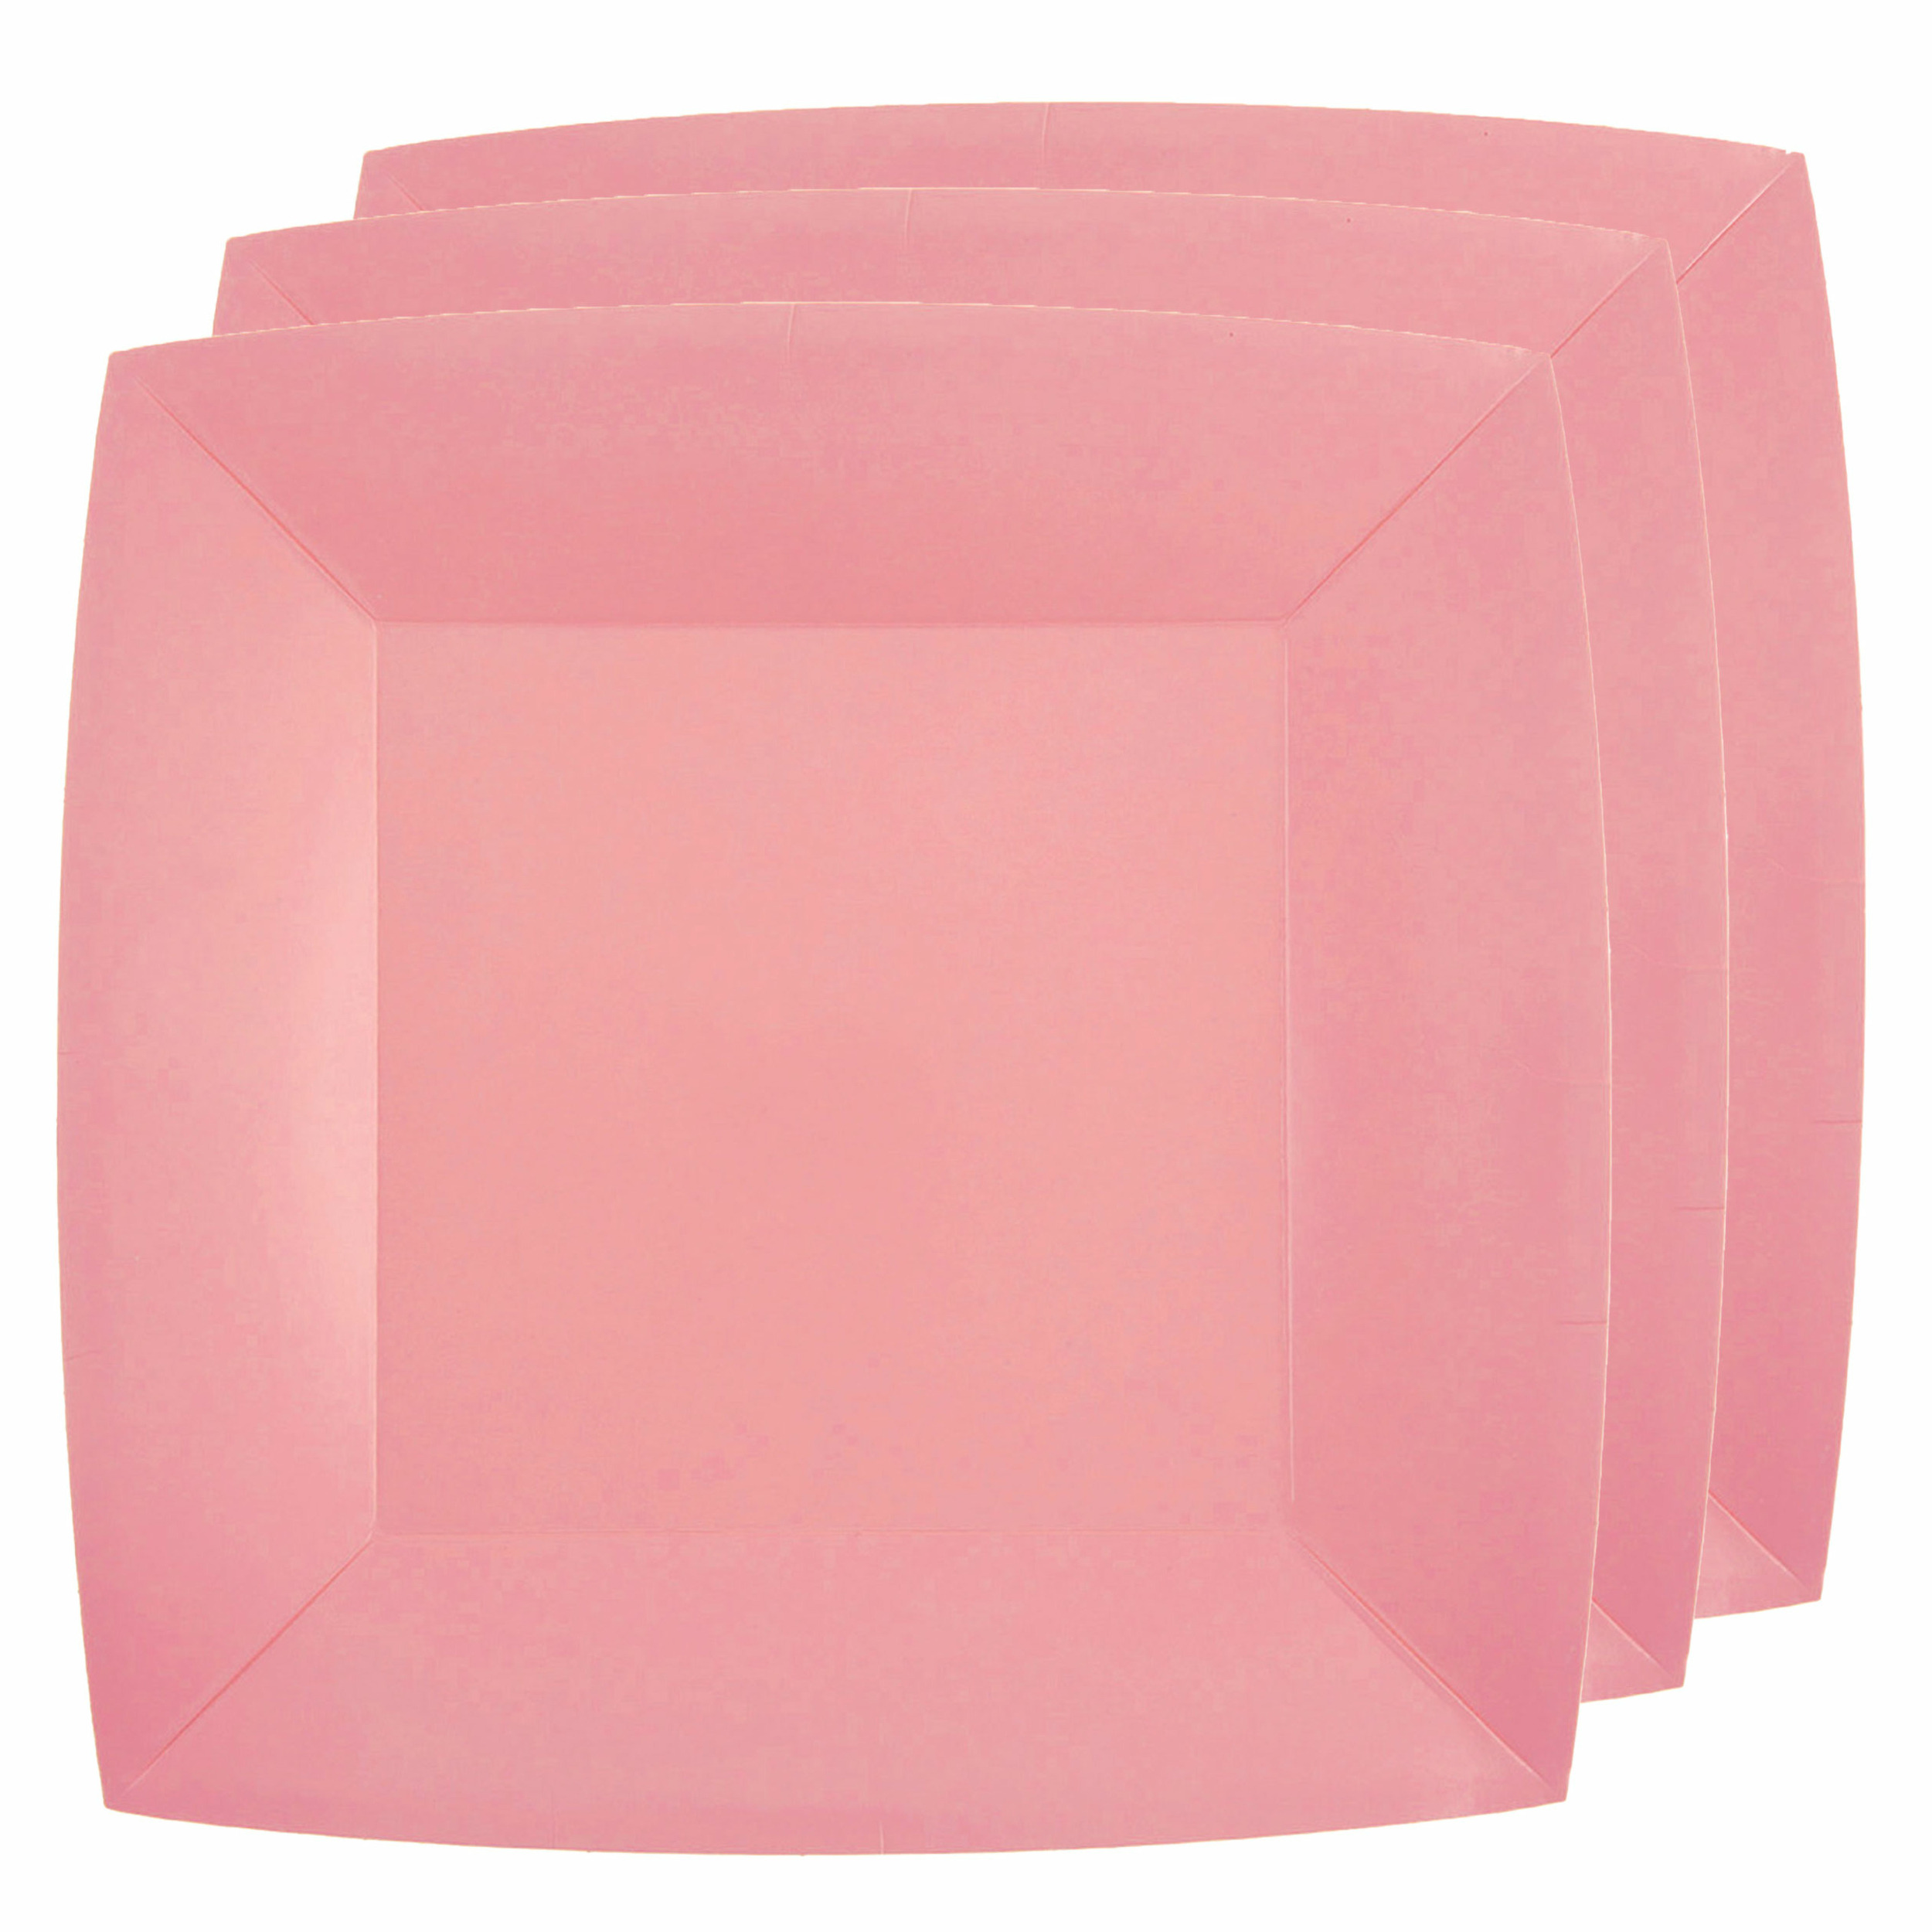 Santex feest ontbijt/gebak bordjes - 20x stuks - papier/karton vierkant - roze - 18cm